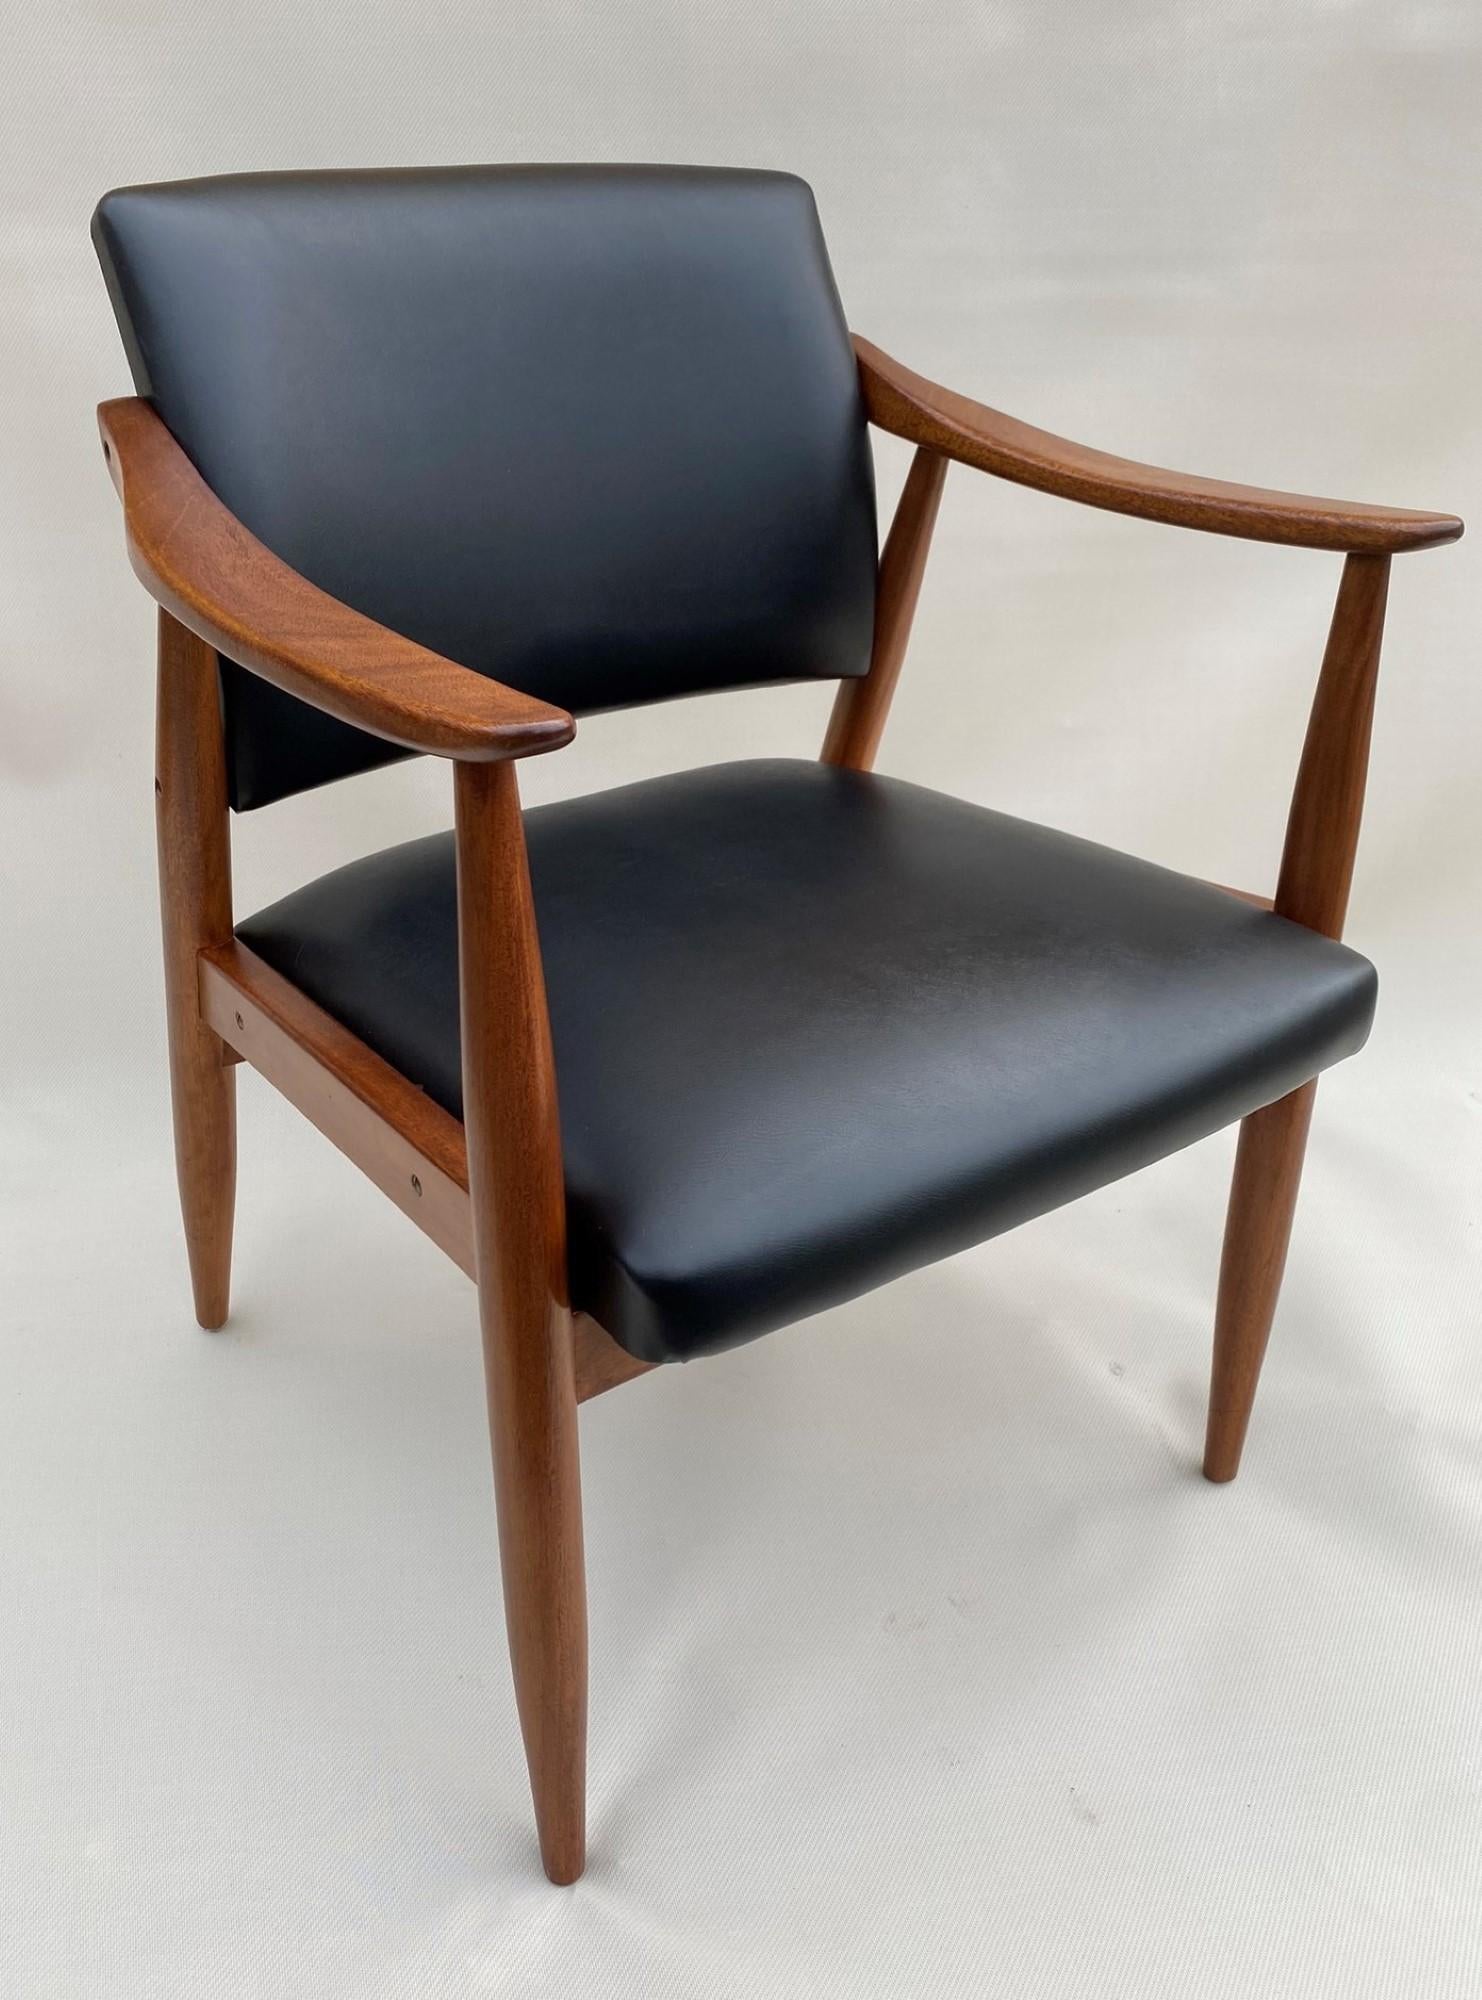 Mid-Century-Sessel aus Teakholz, skandinavisch, 1960er Jahre (Dänisch)